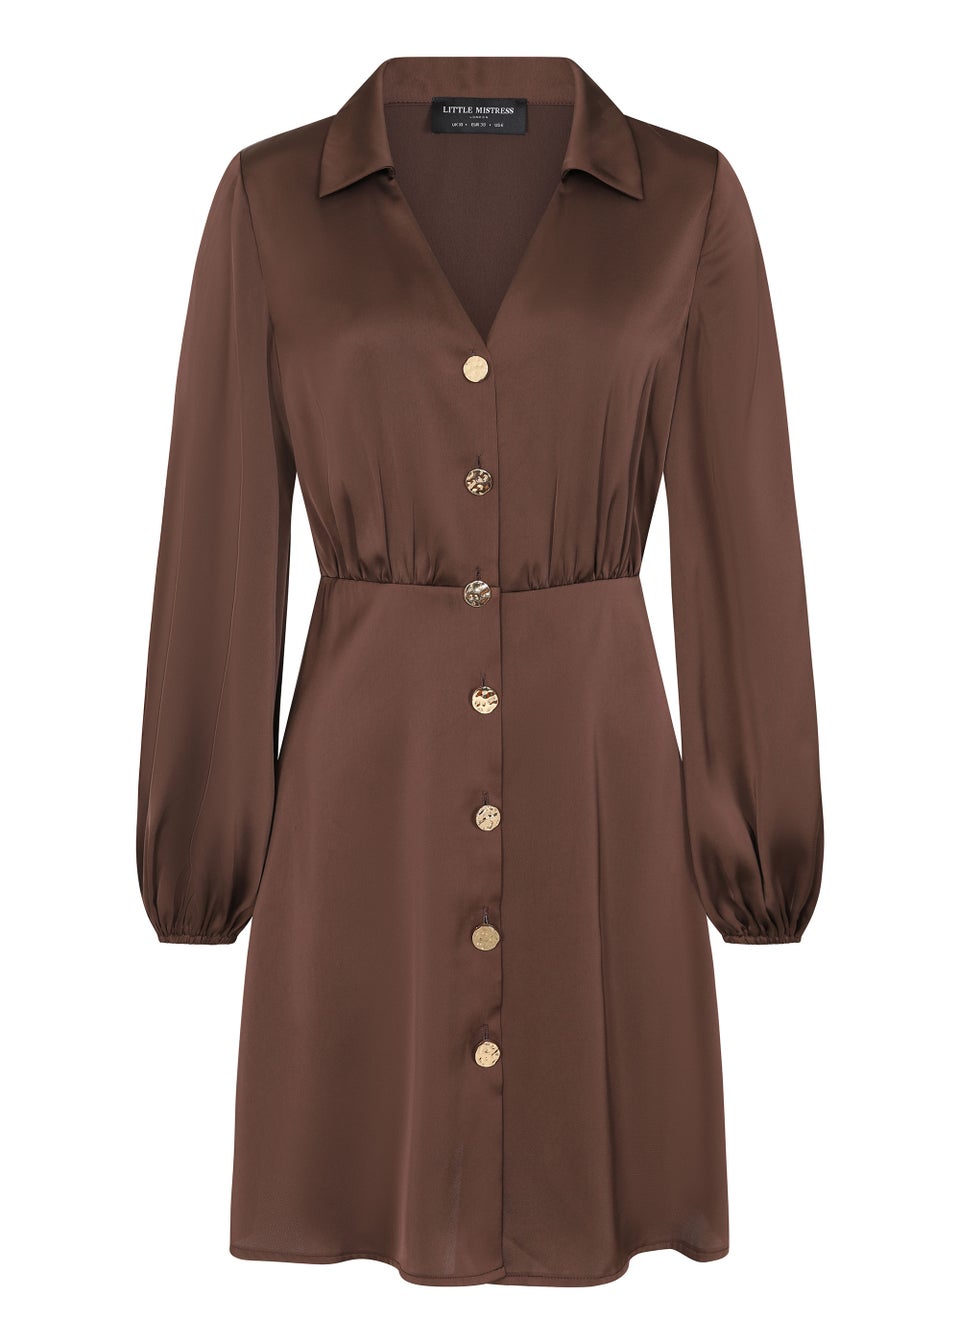 Little Mistress by Vogue Williams Chocolate Brown Satin Mini Dress